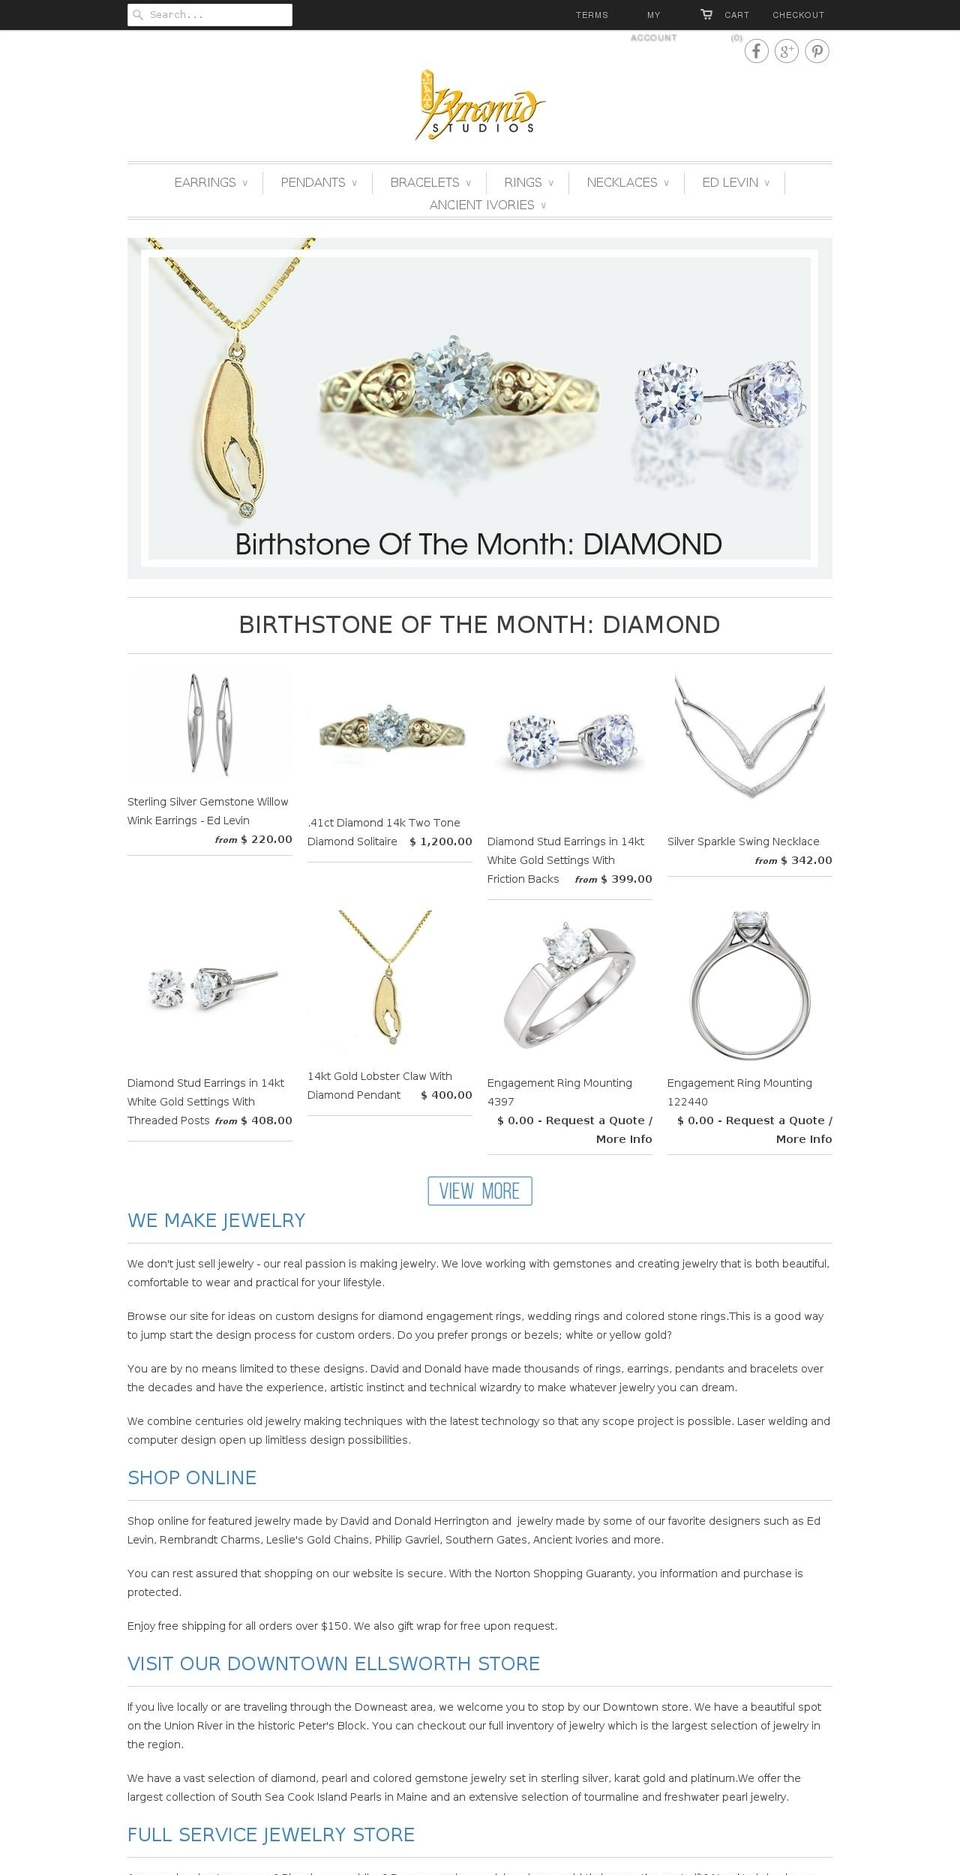 pyramidjewelry.me shopify website screenshot